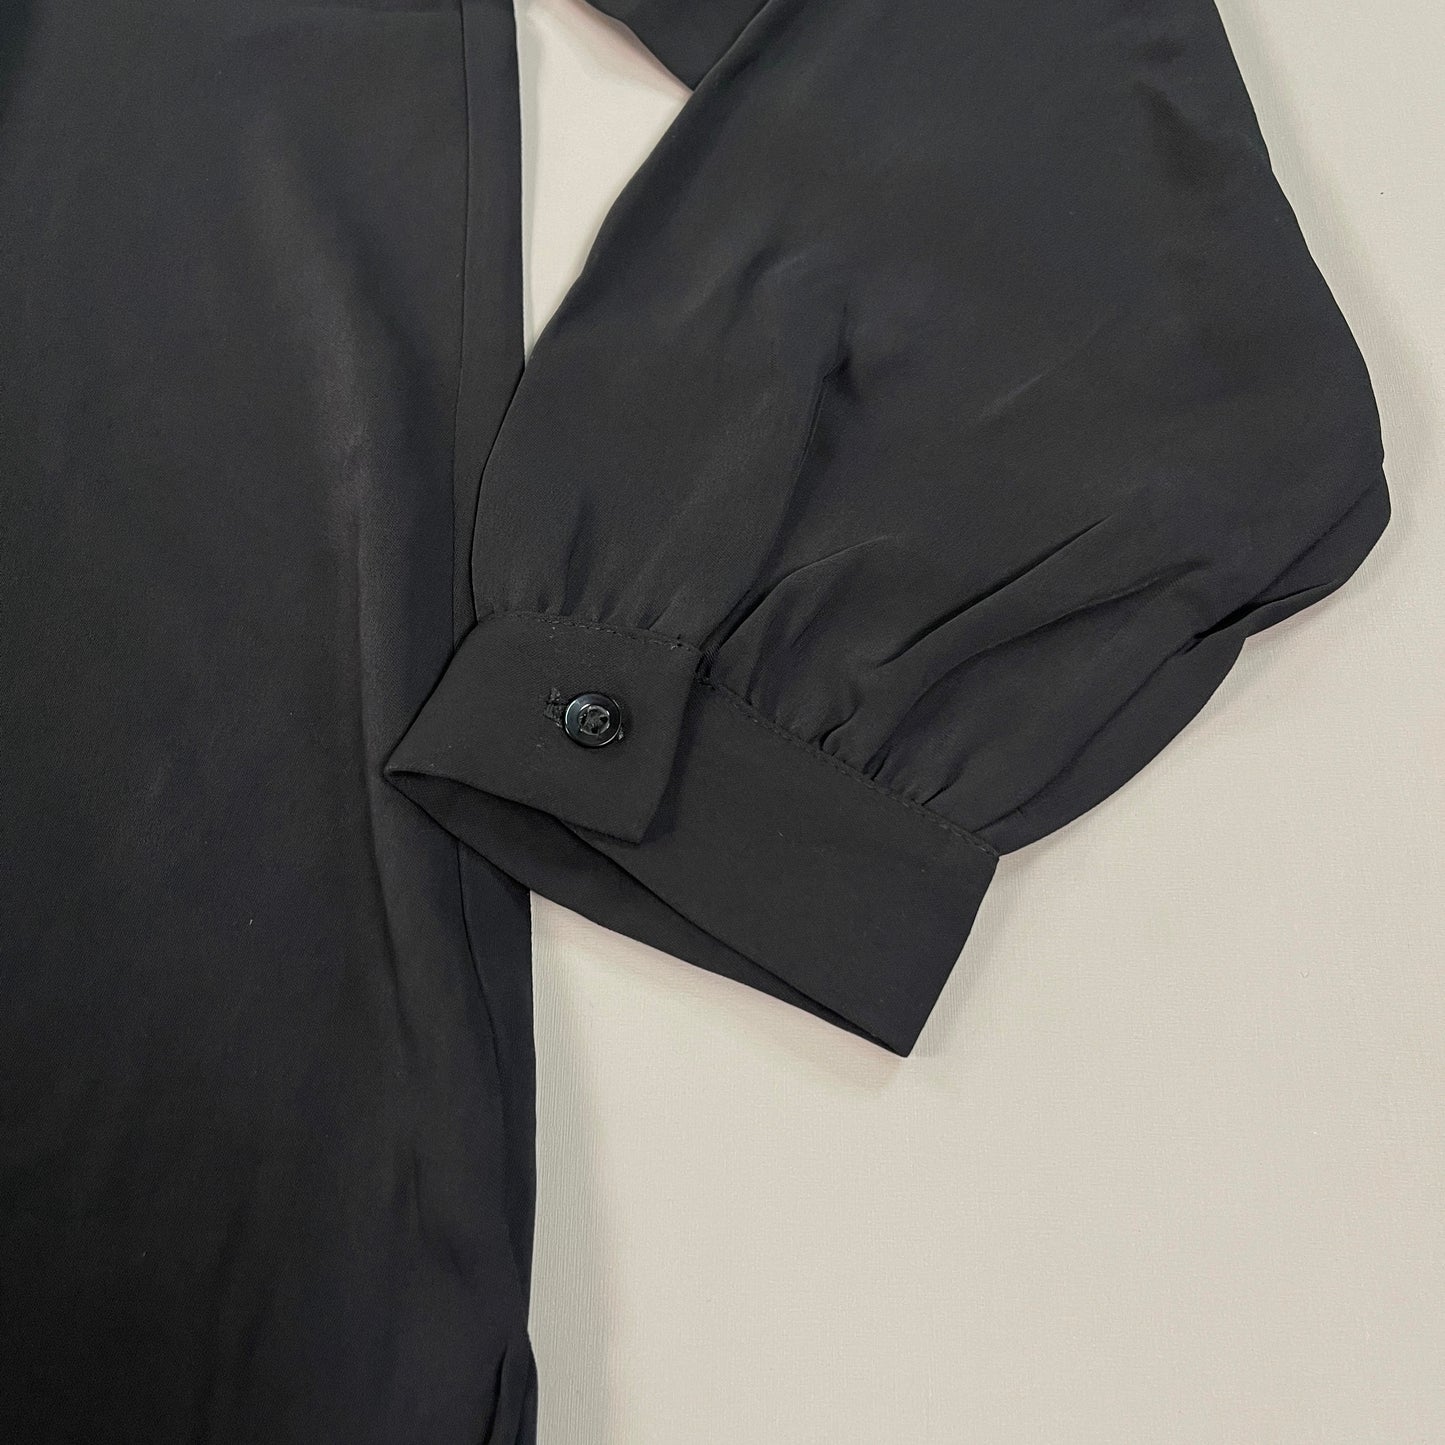 MARTHA STEWART Woven Front Button Blouse Top Tie Neck Women's Sz M Black (New)